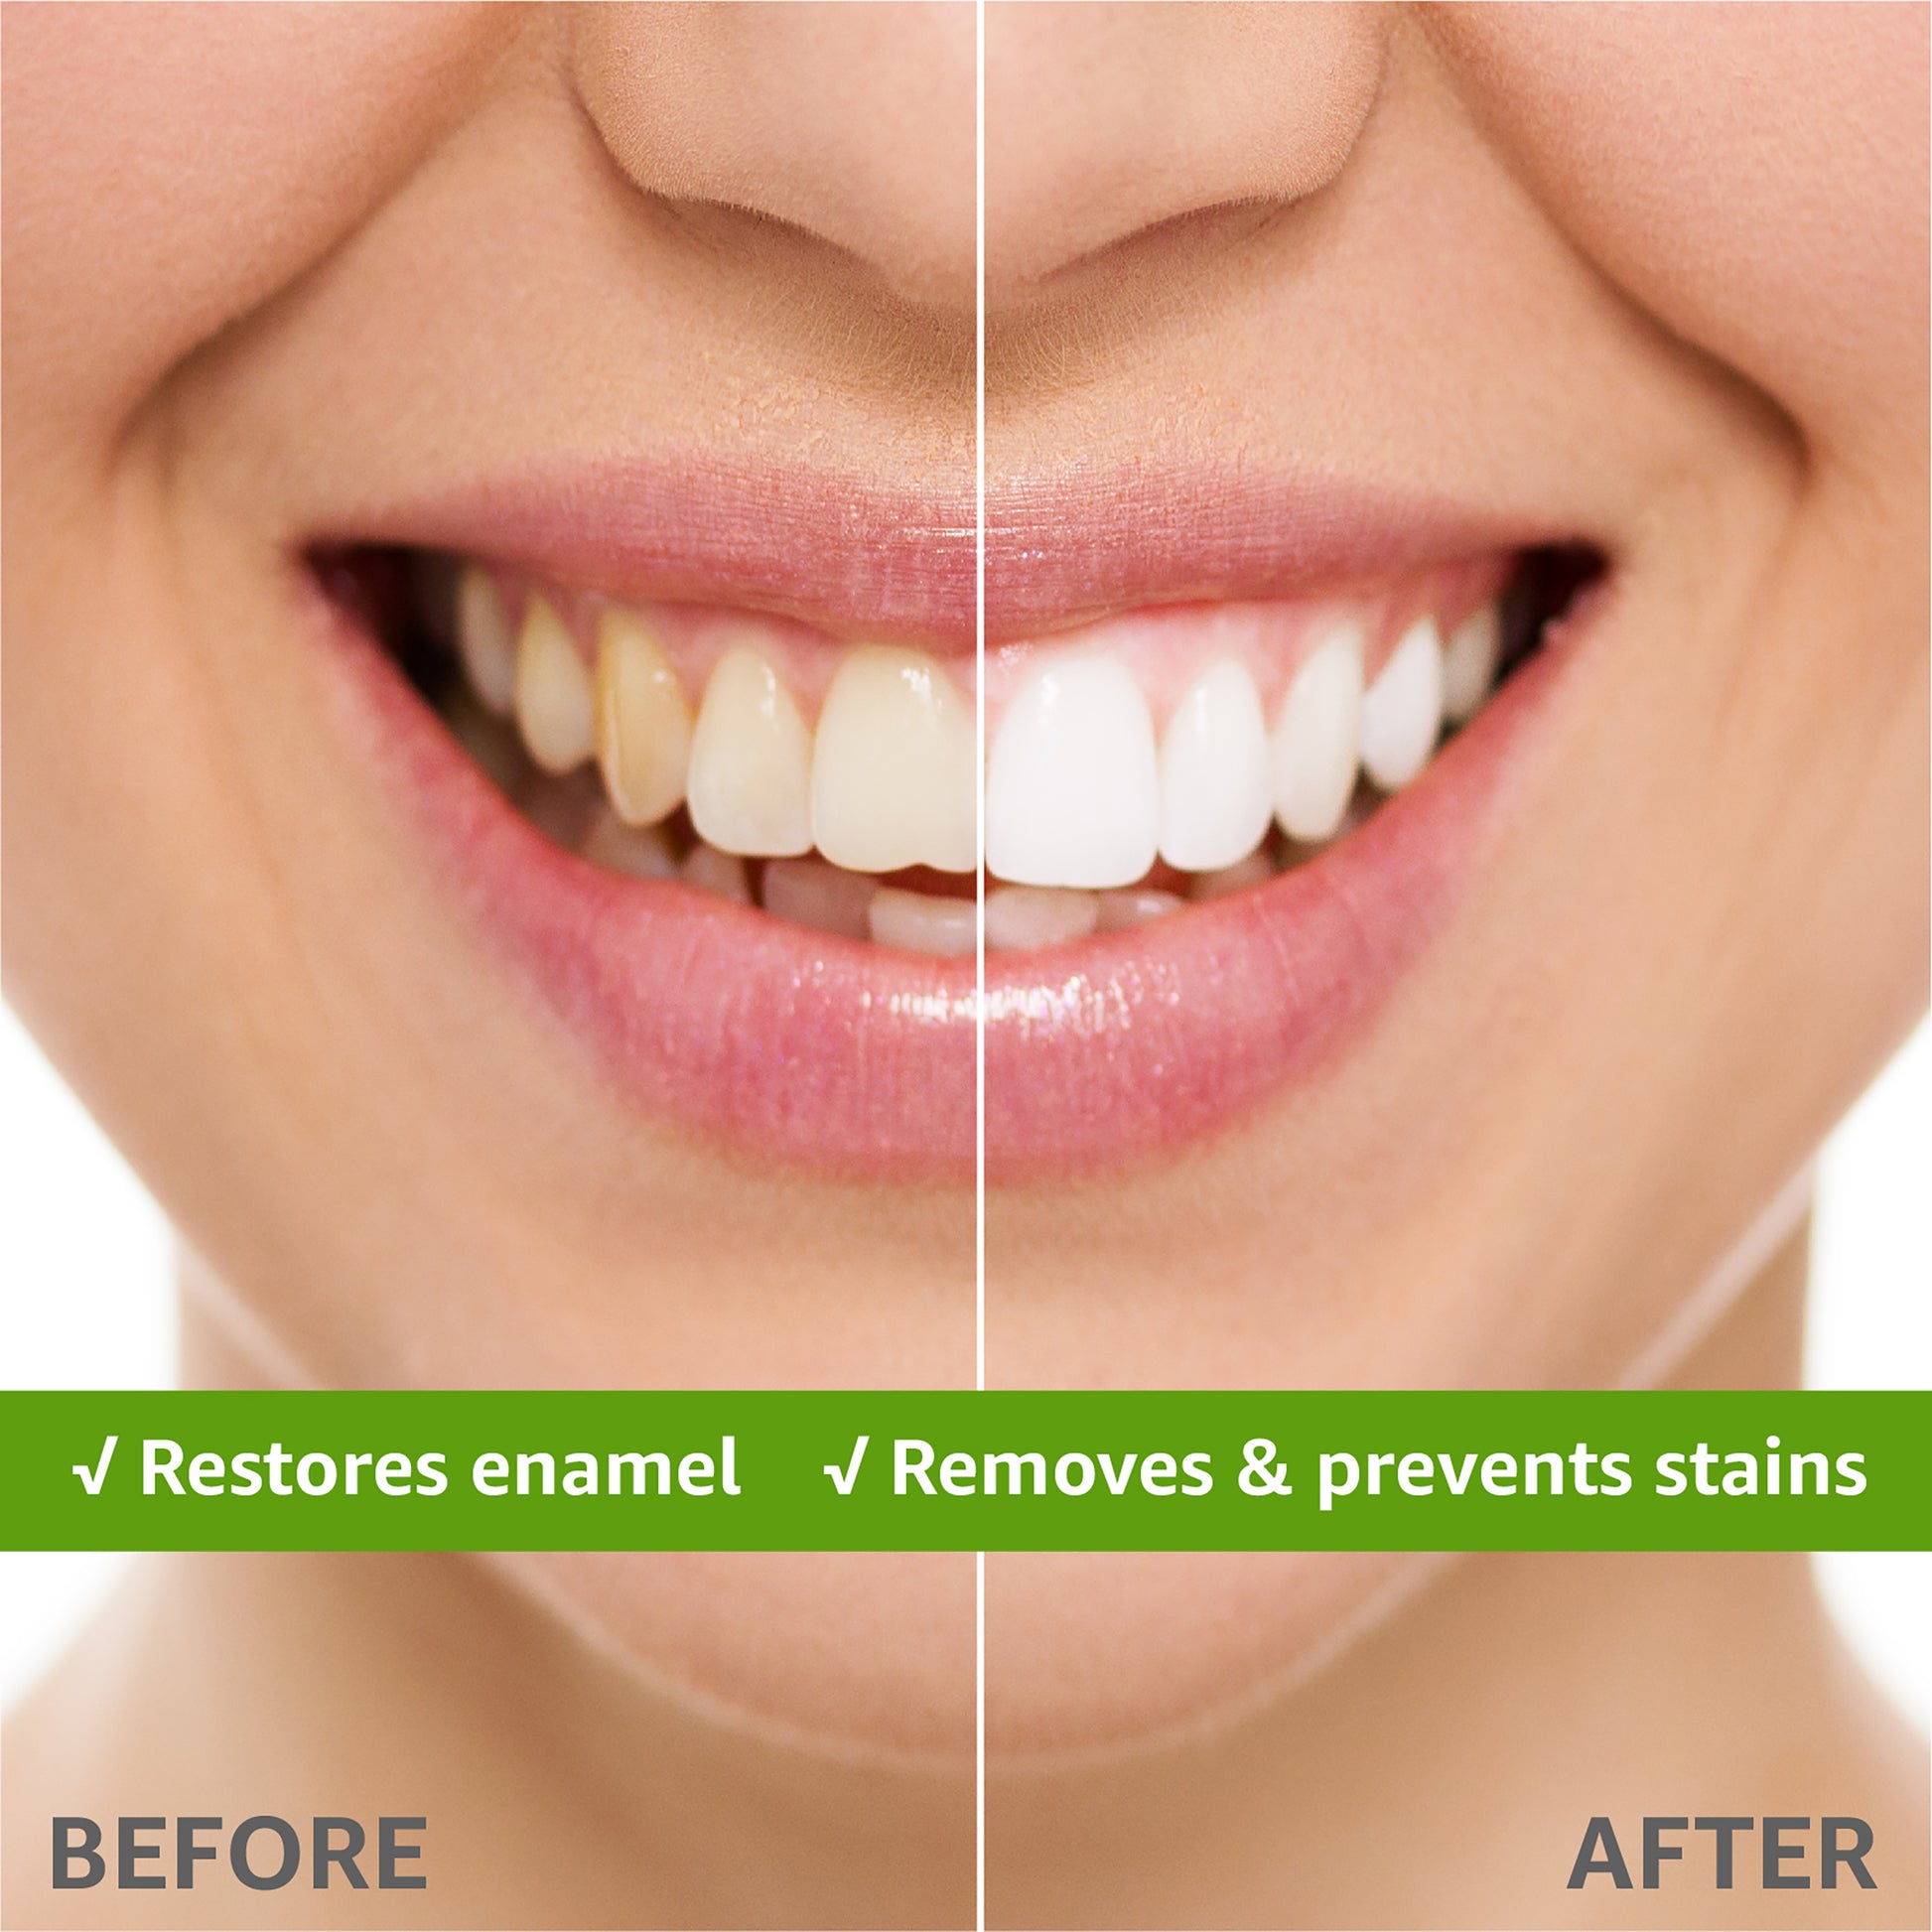 Restores enamel, removes & prevents stains